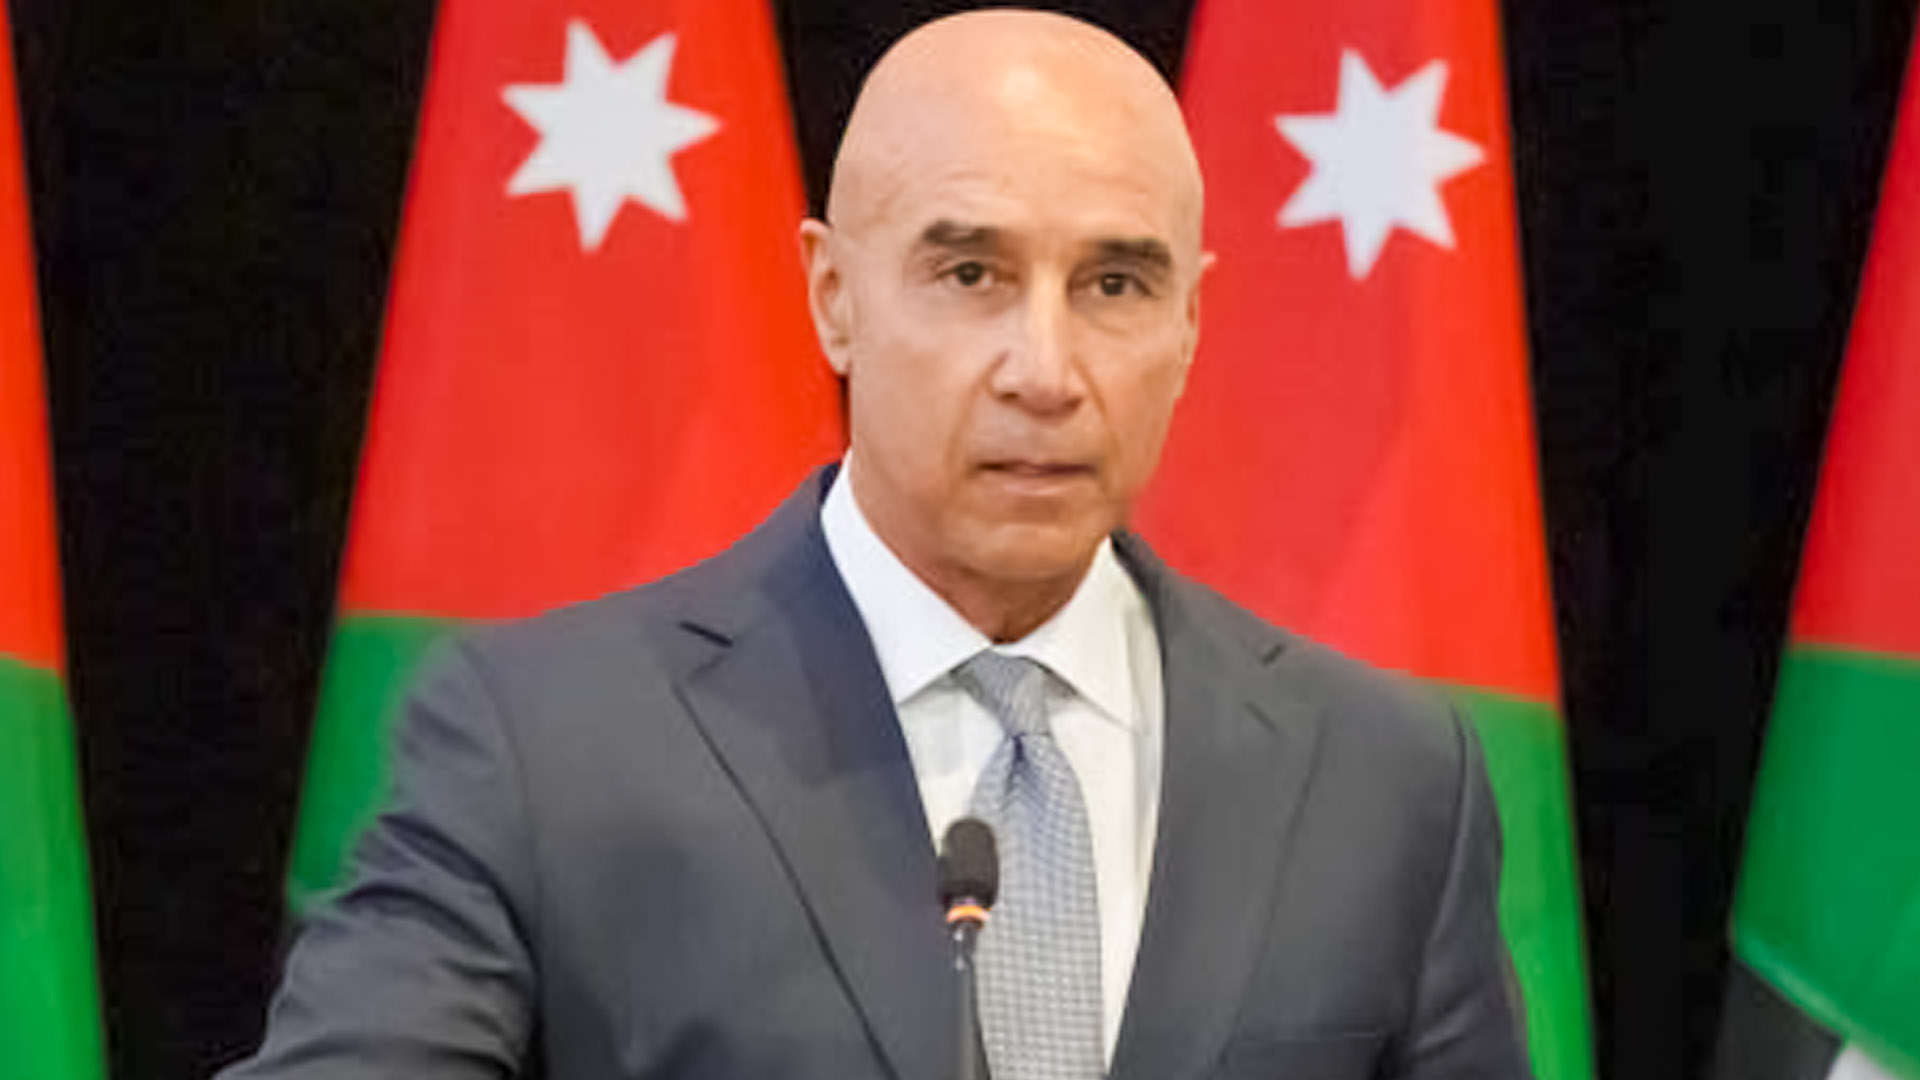 The Jordanian Minister urges Irish businesses to invest in Jordan